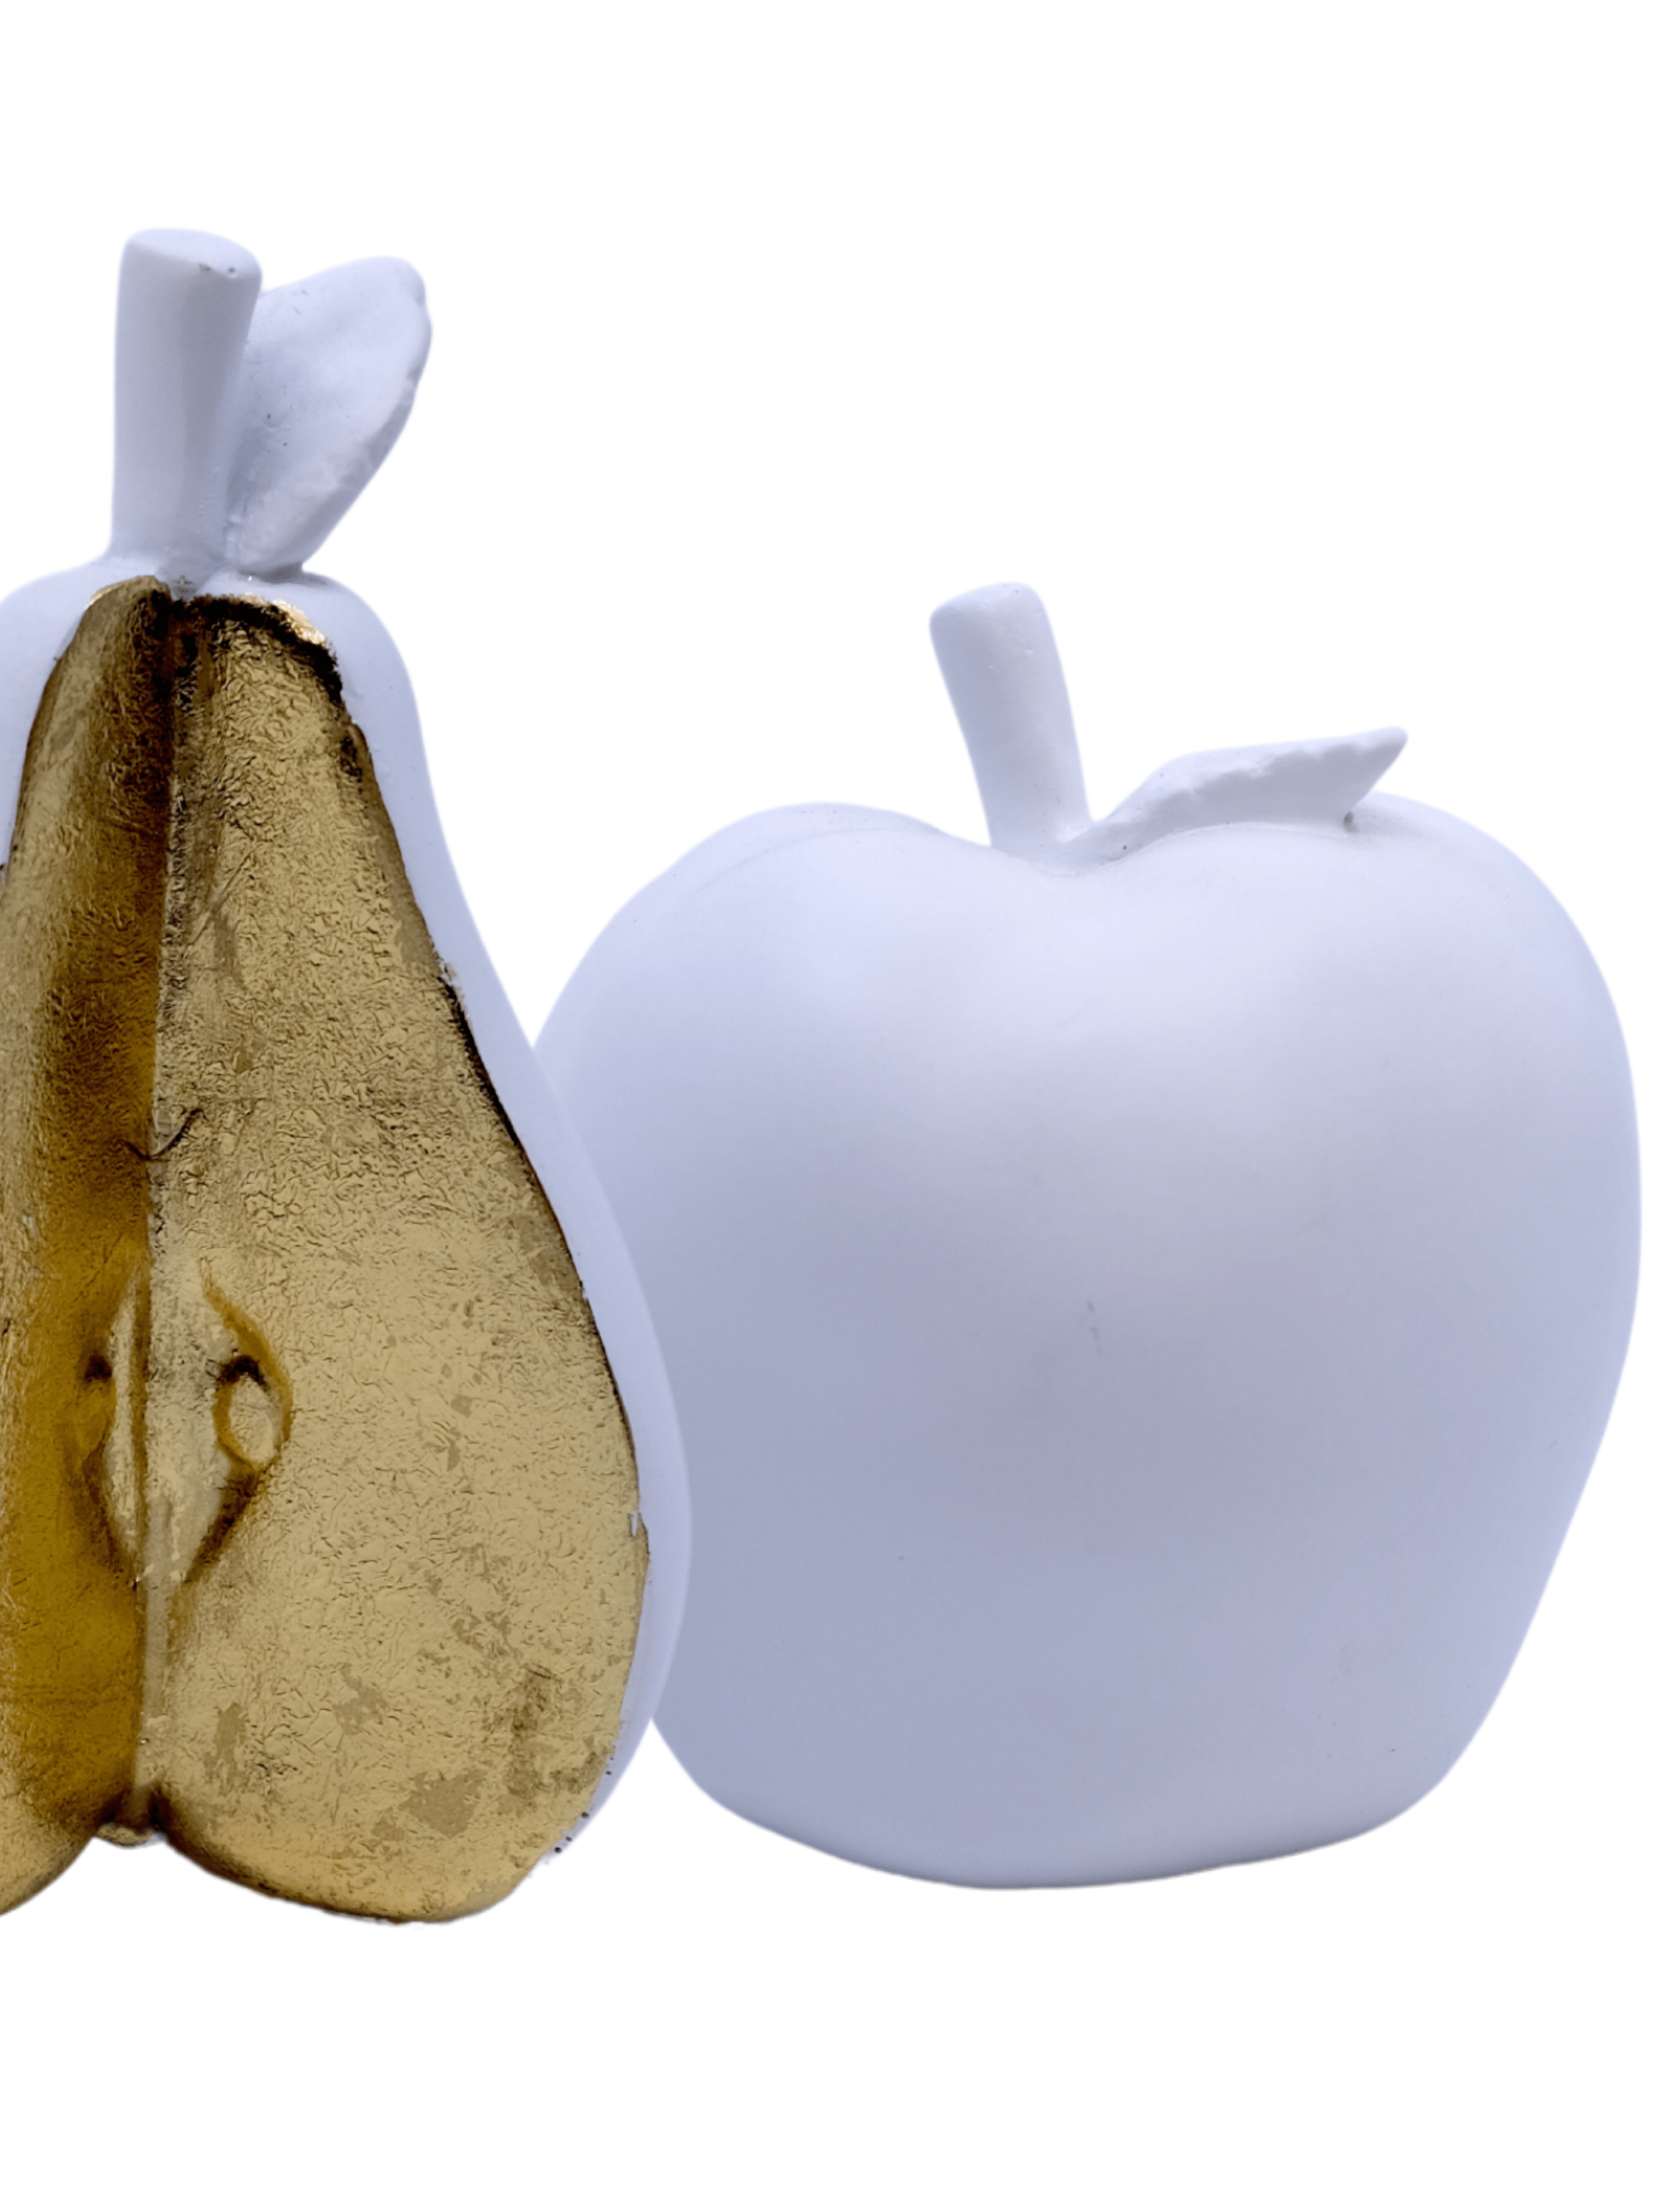 Vintage Apple Figurine, Gold, Wire Mesh, Apple Decor, Metal Fruit | eBay